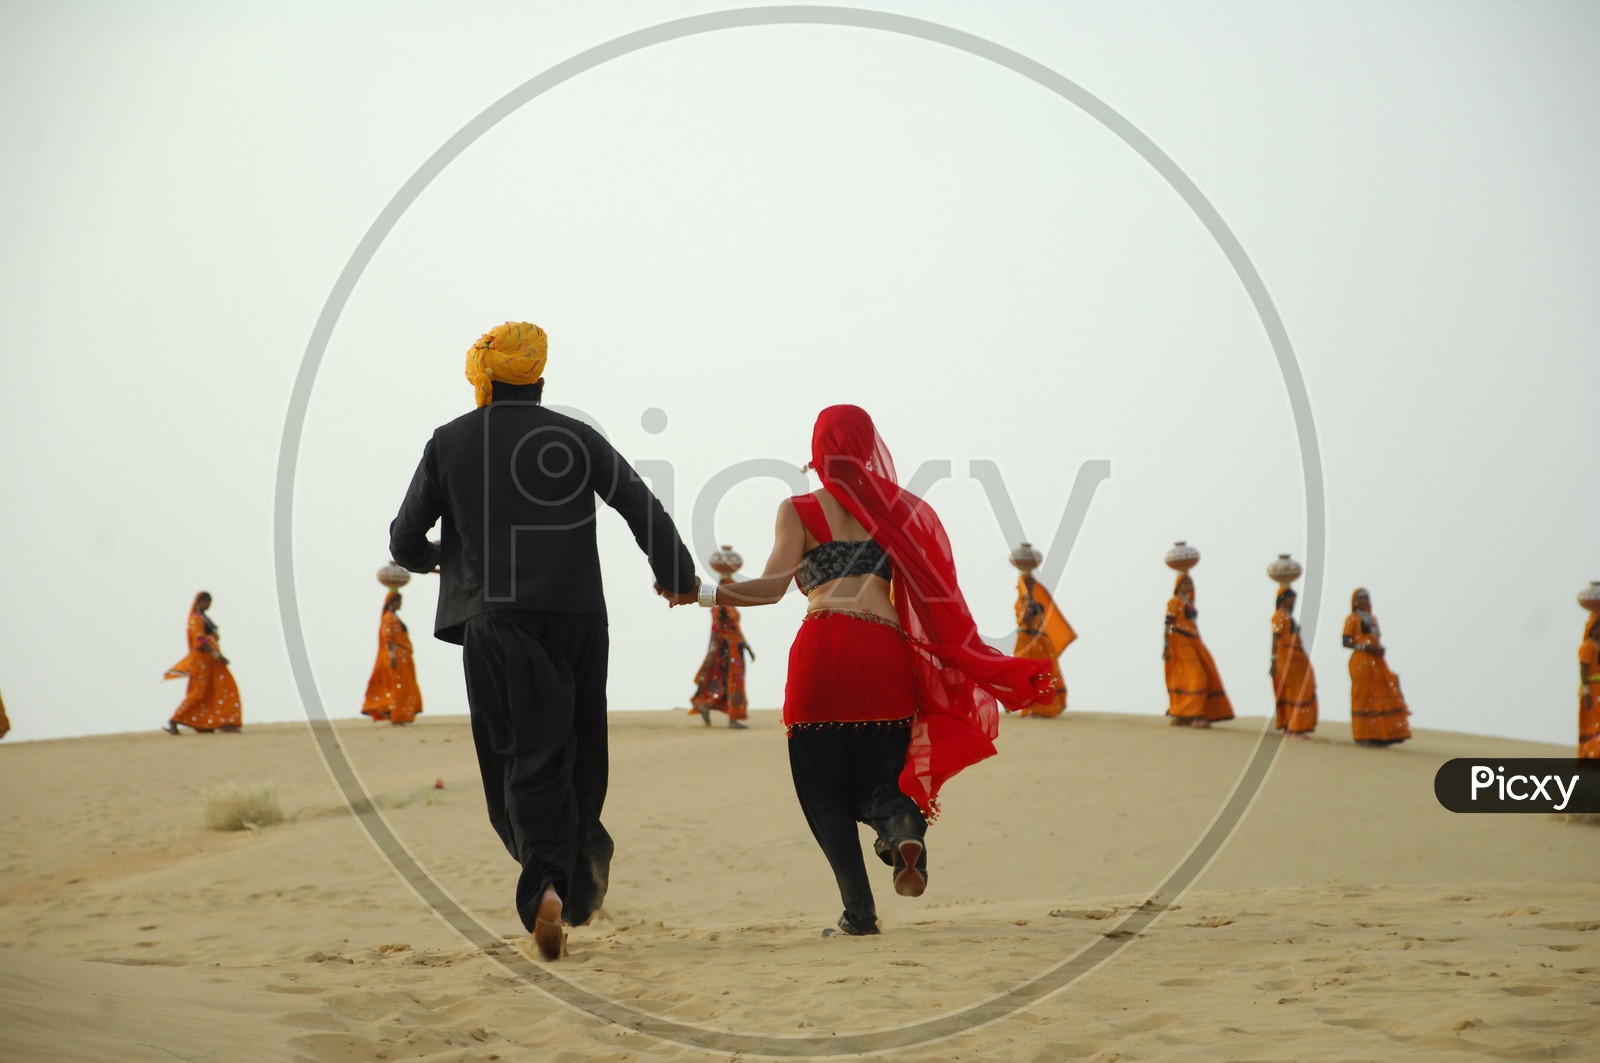 A man and woman running in a desert